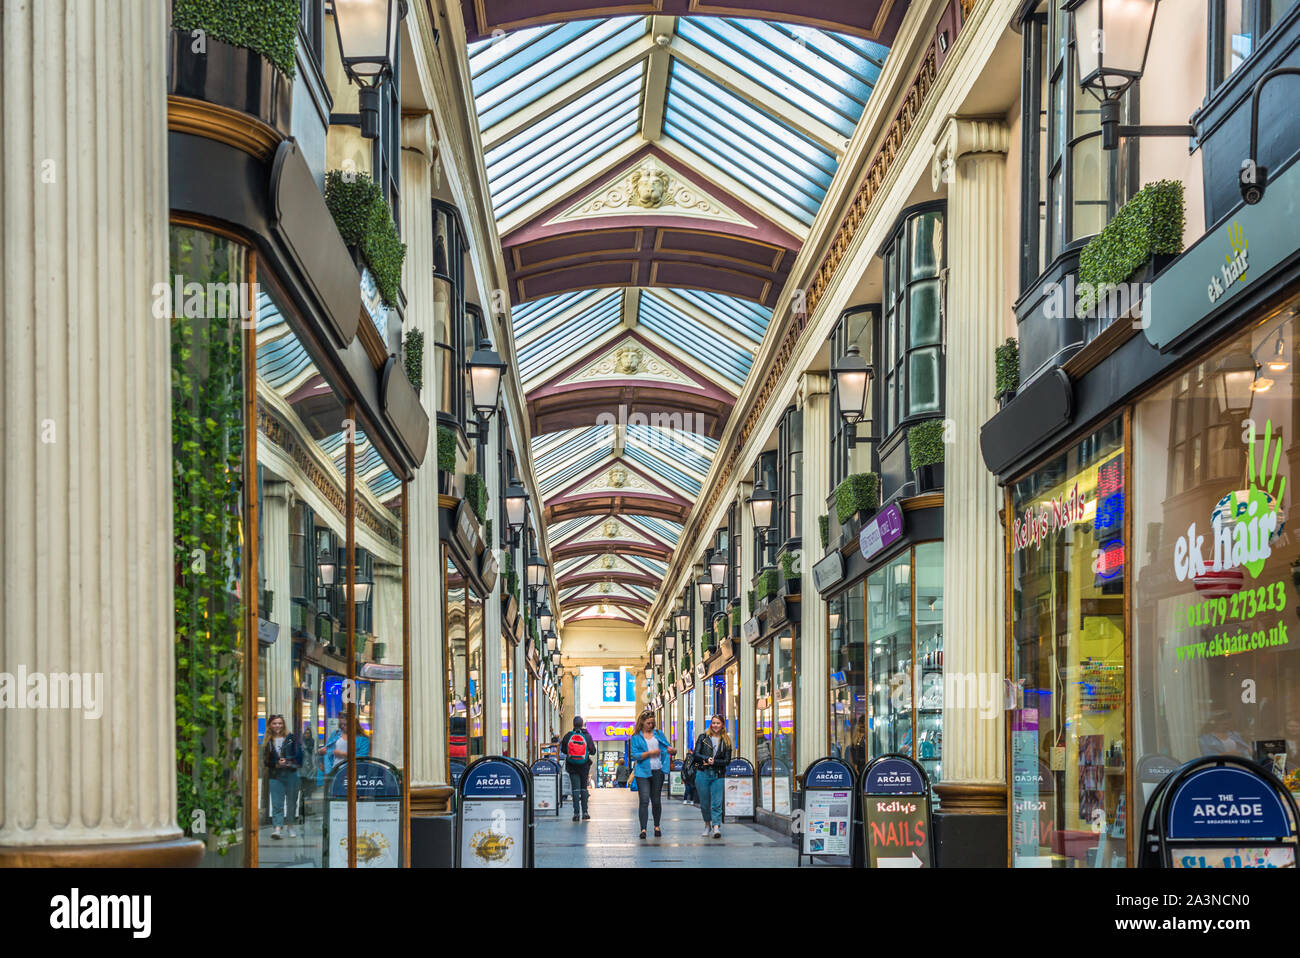 The Arcade - retail shopping precinct in Broadmead, central Bristol, UK. Stock Photo